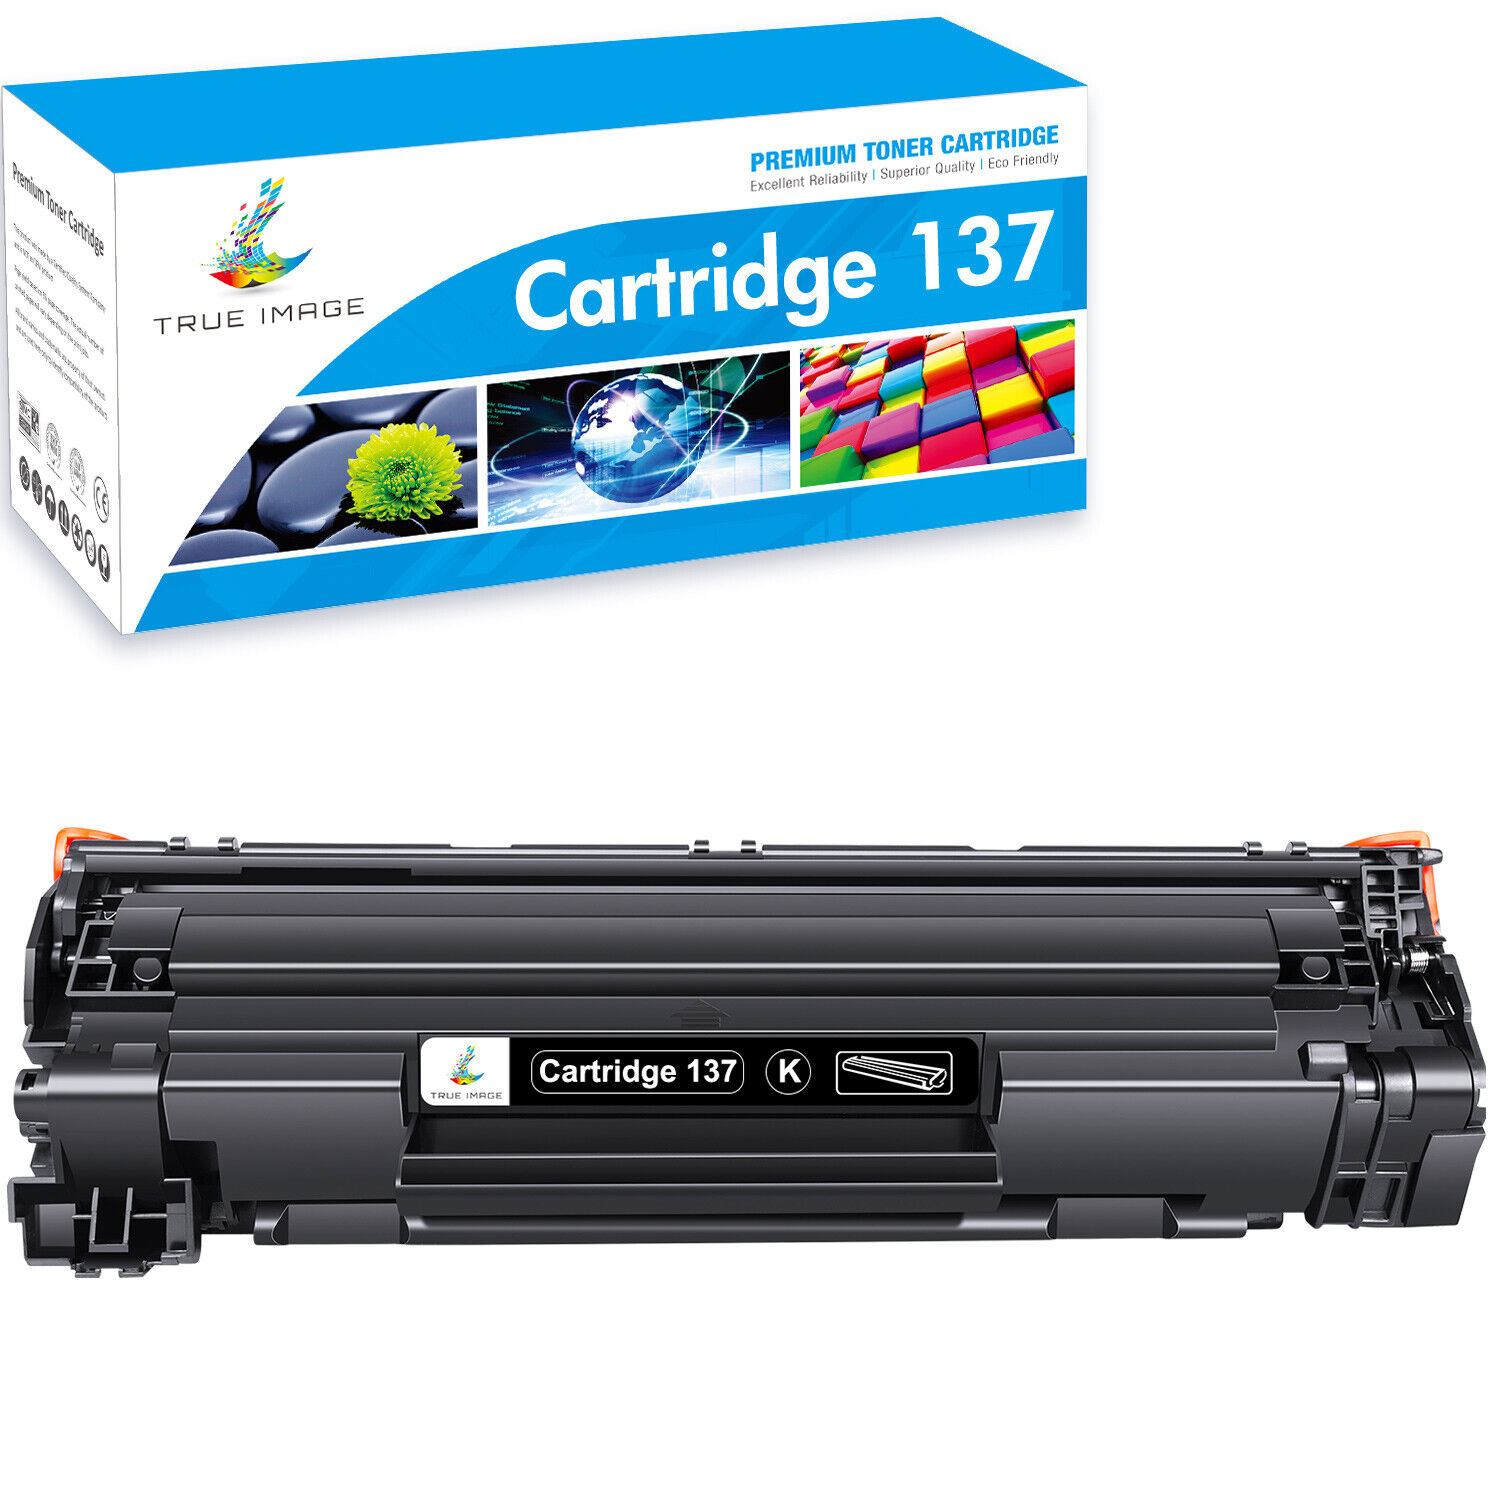 1-20PK HI-Yield CRG 137 Toner for Canon Imageclass MF249dw MF227dw Printer LOT